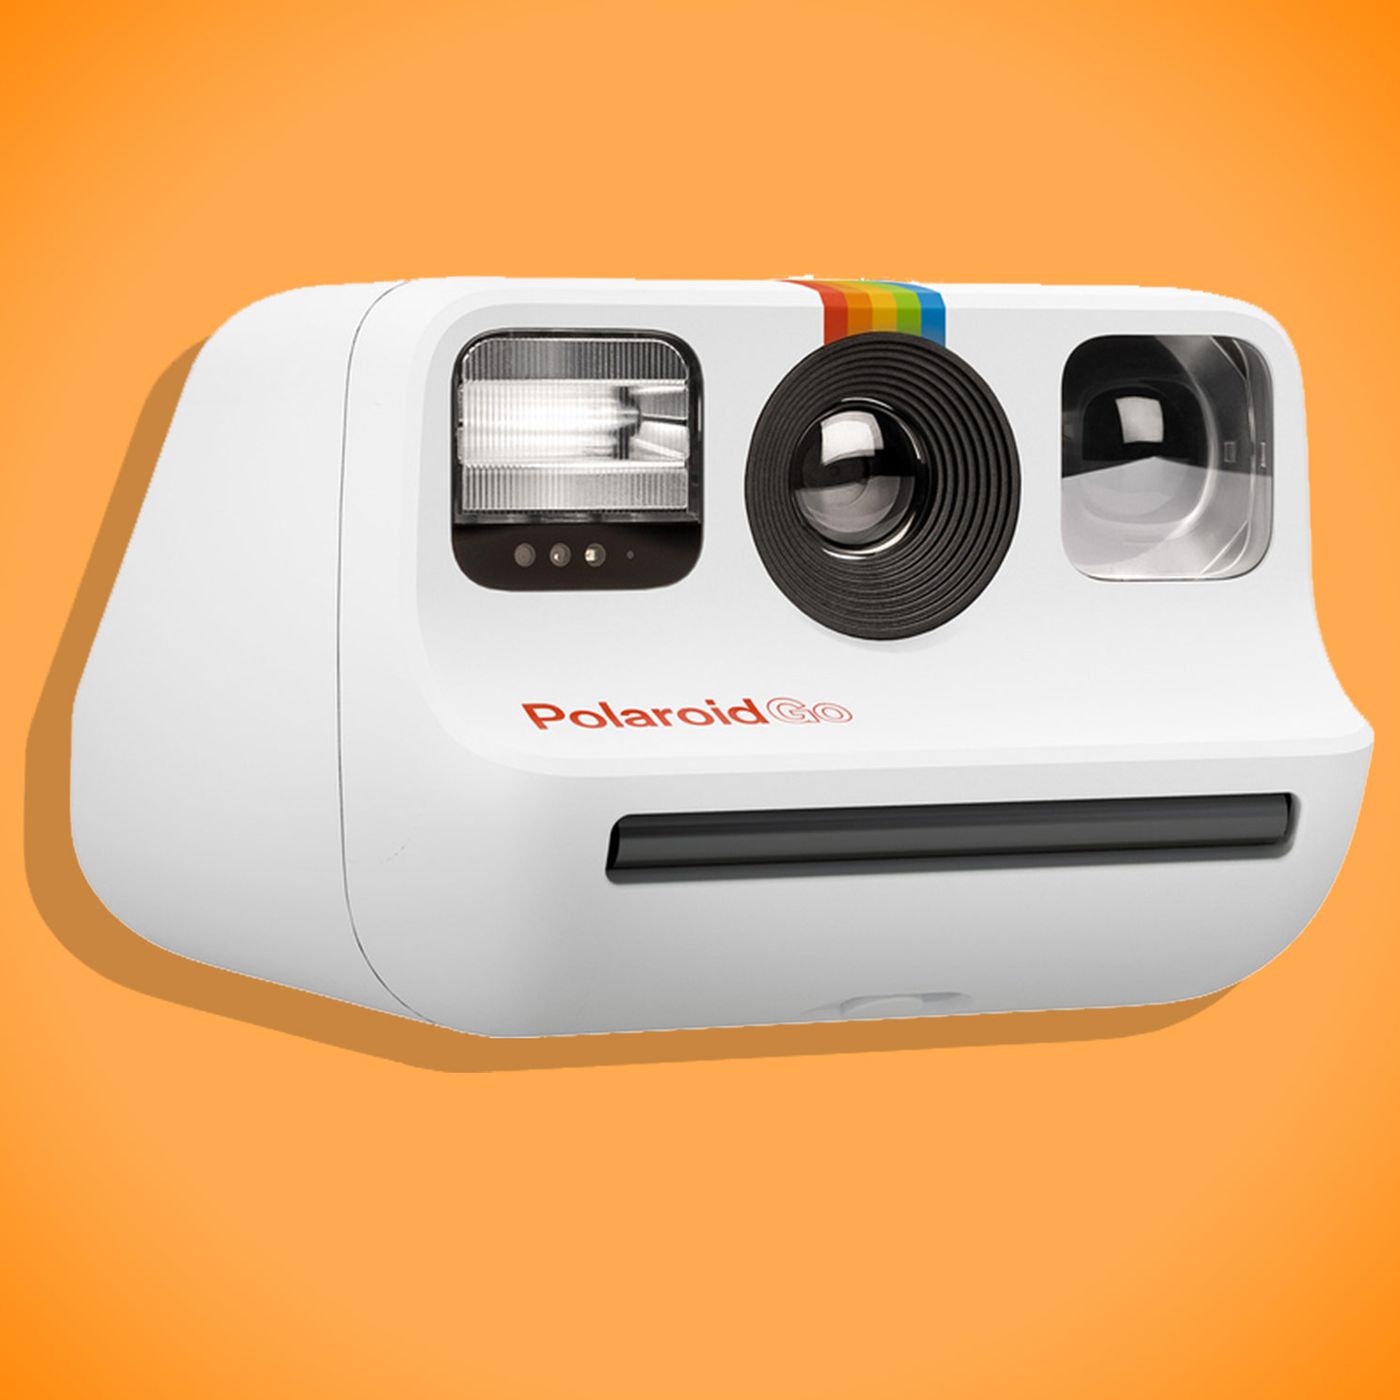 Polaroid Go review: This mini camera helps you bring fun film